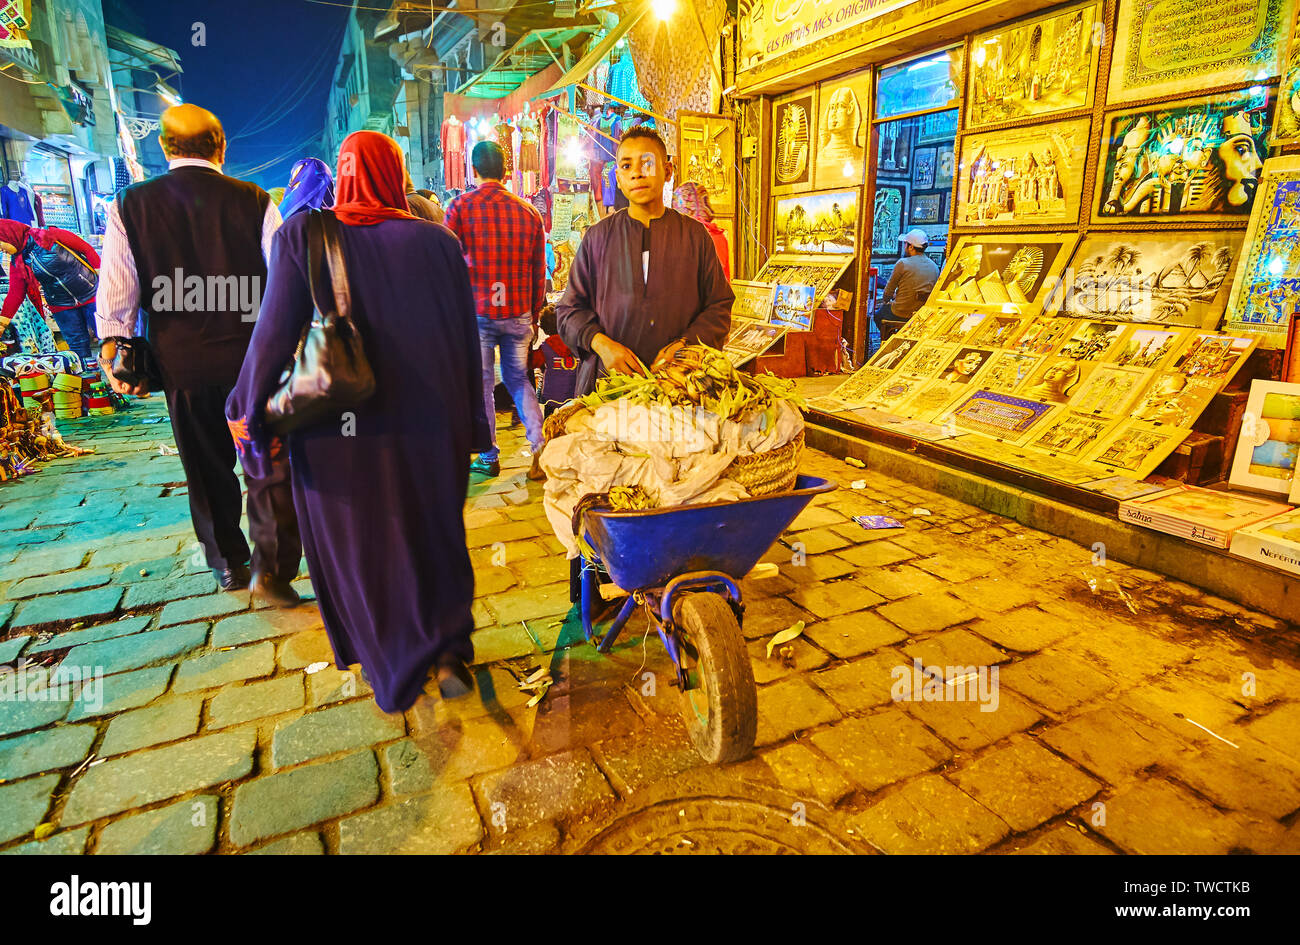 CAIRO, EGYPT - DECEMBER 22, 2017: Teenager vendor of grilled corn walks with his wheelbarrow along the souvenir stalls of Souk Khan El Khalili in Al-M Stock Photo